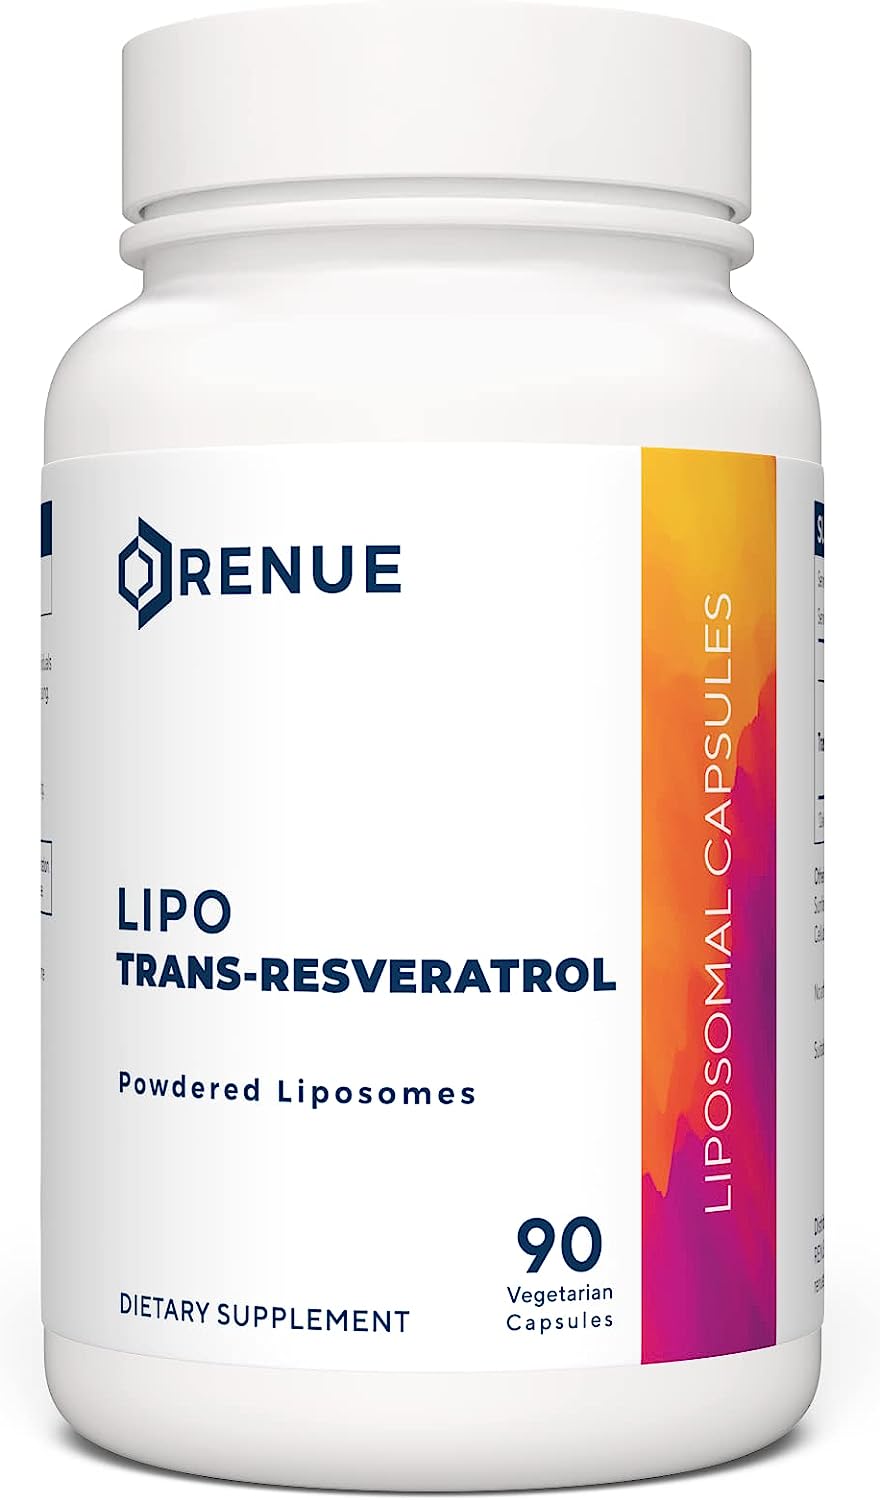 RENUE 社 リポソーム レスベラトロール サプリメント 1粒あたり125mg 90粒入りRENUE Liposomal Trans-Resveratrol Supplement 125 mg - Bioavailable Formula for Increased Absorption 90 Capsules